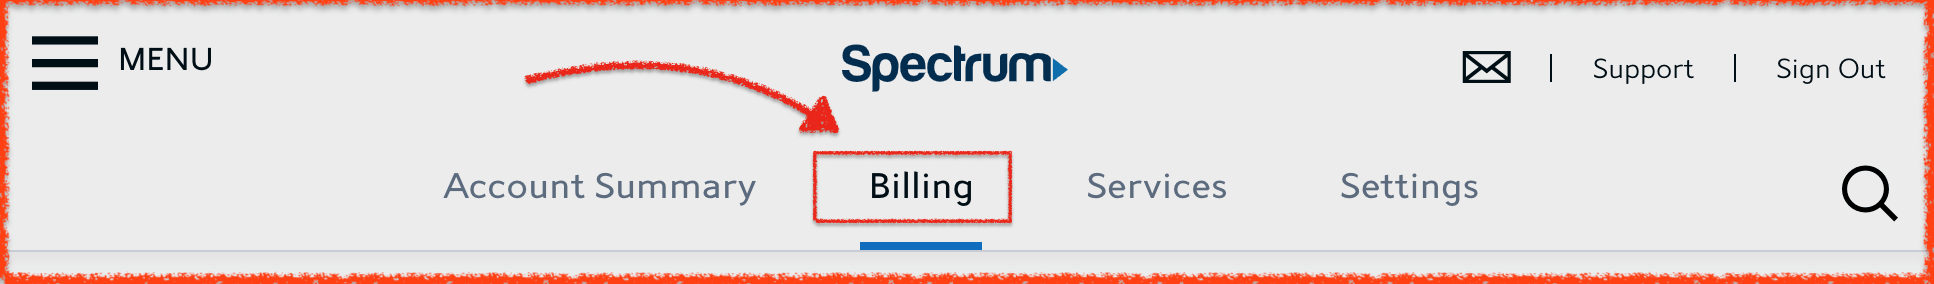 spectrum billing